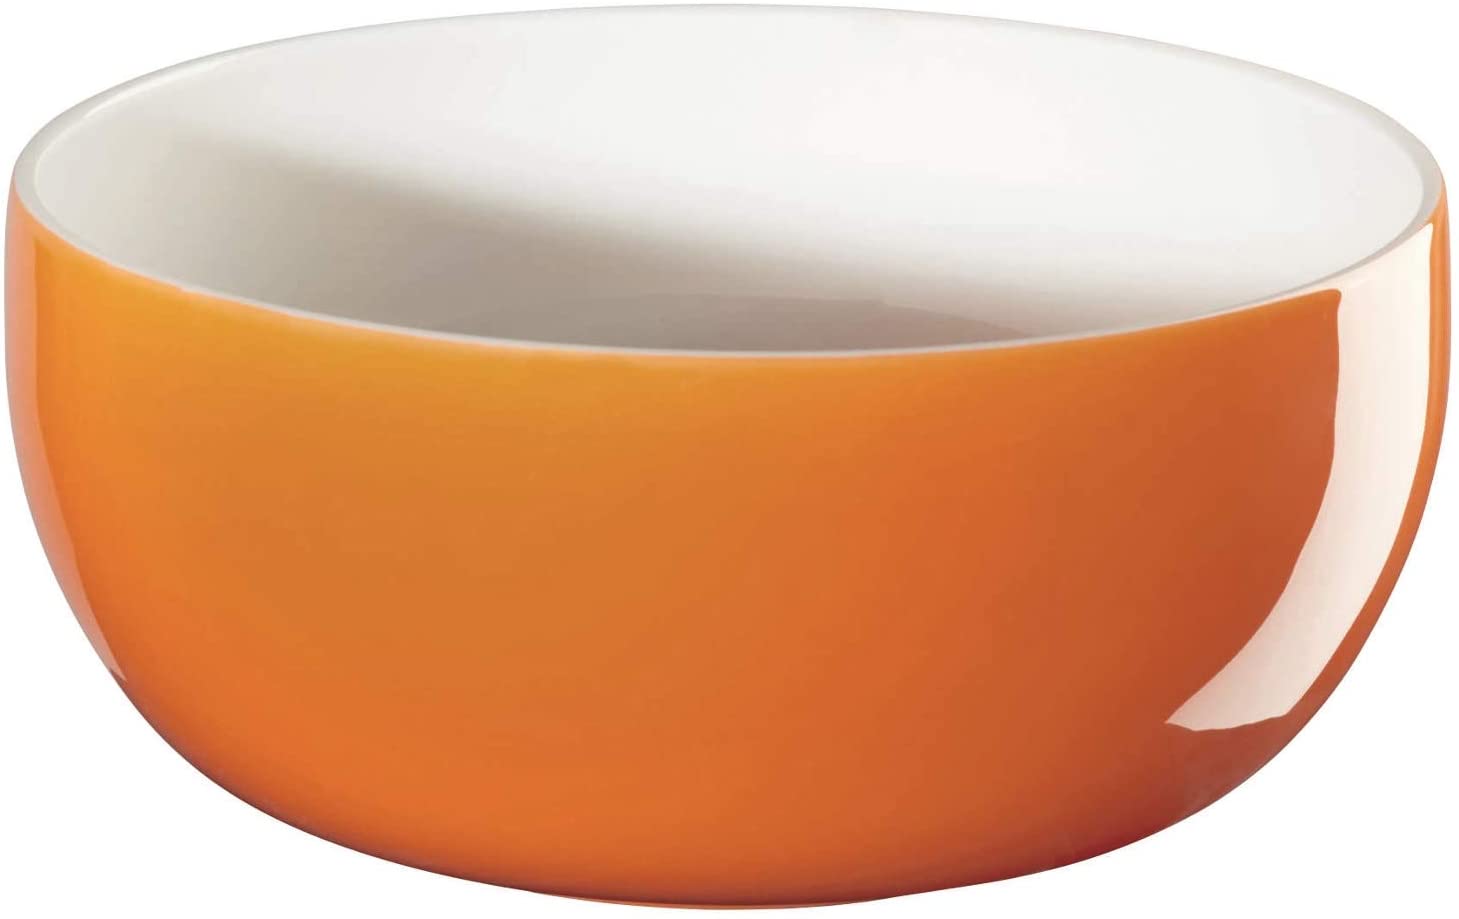 ASA 19500807 COPPA Cereal Bowl 6.5 cm Orange